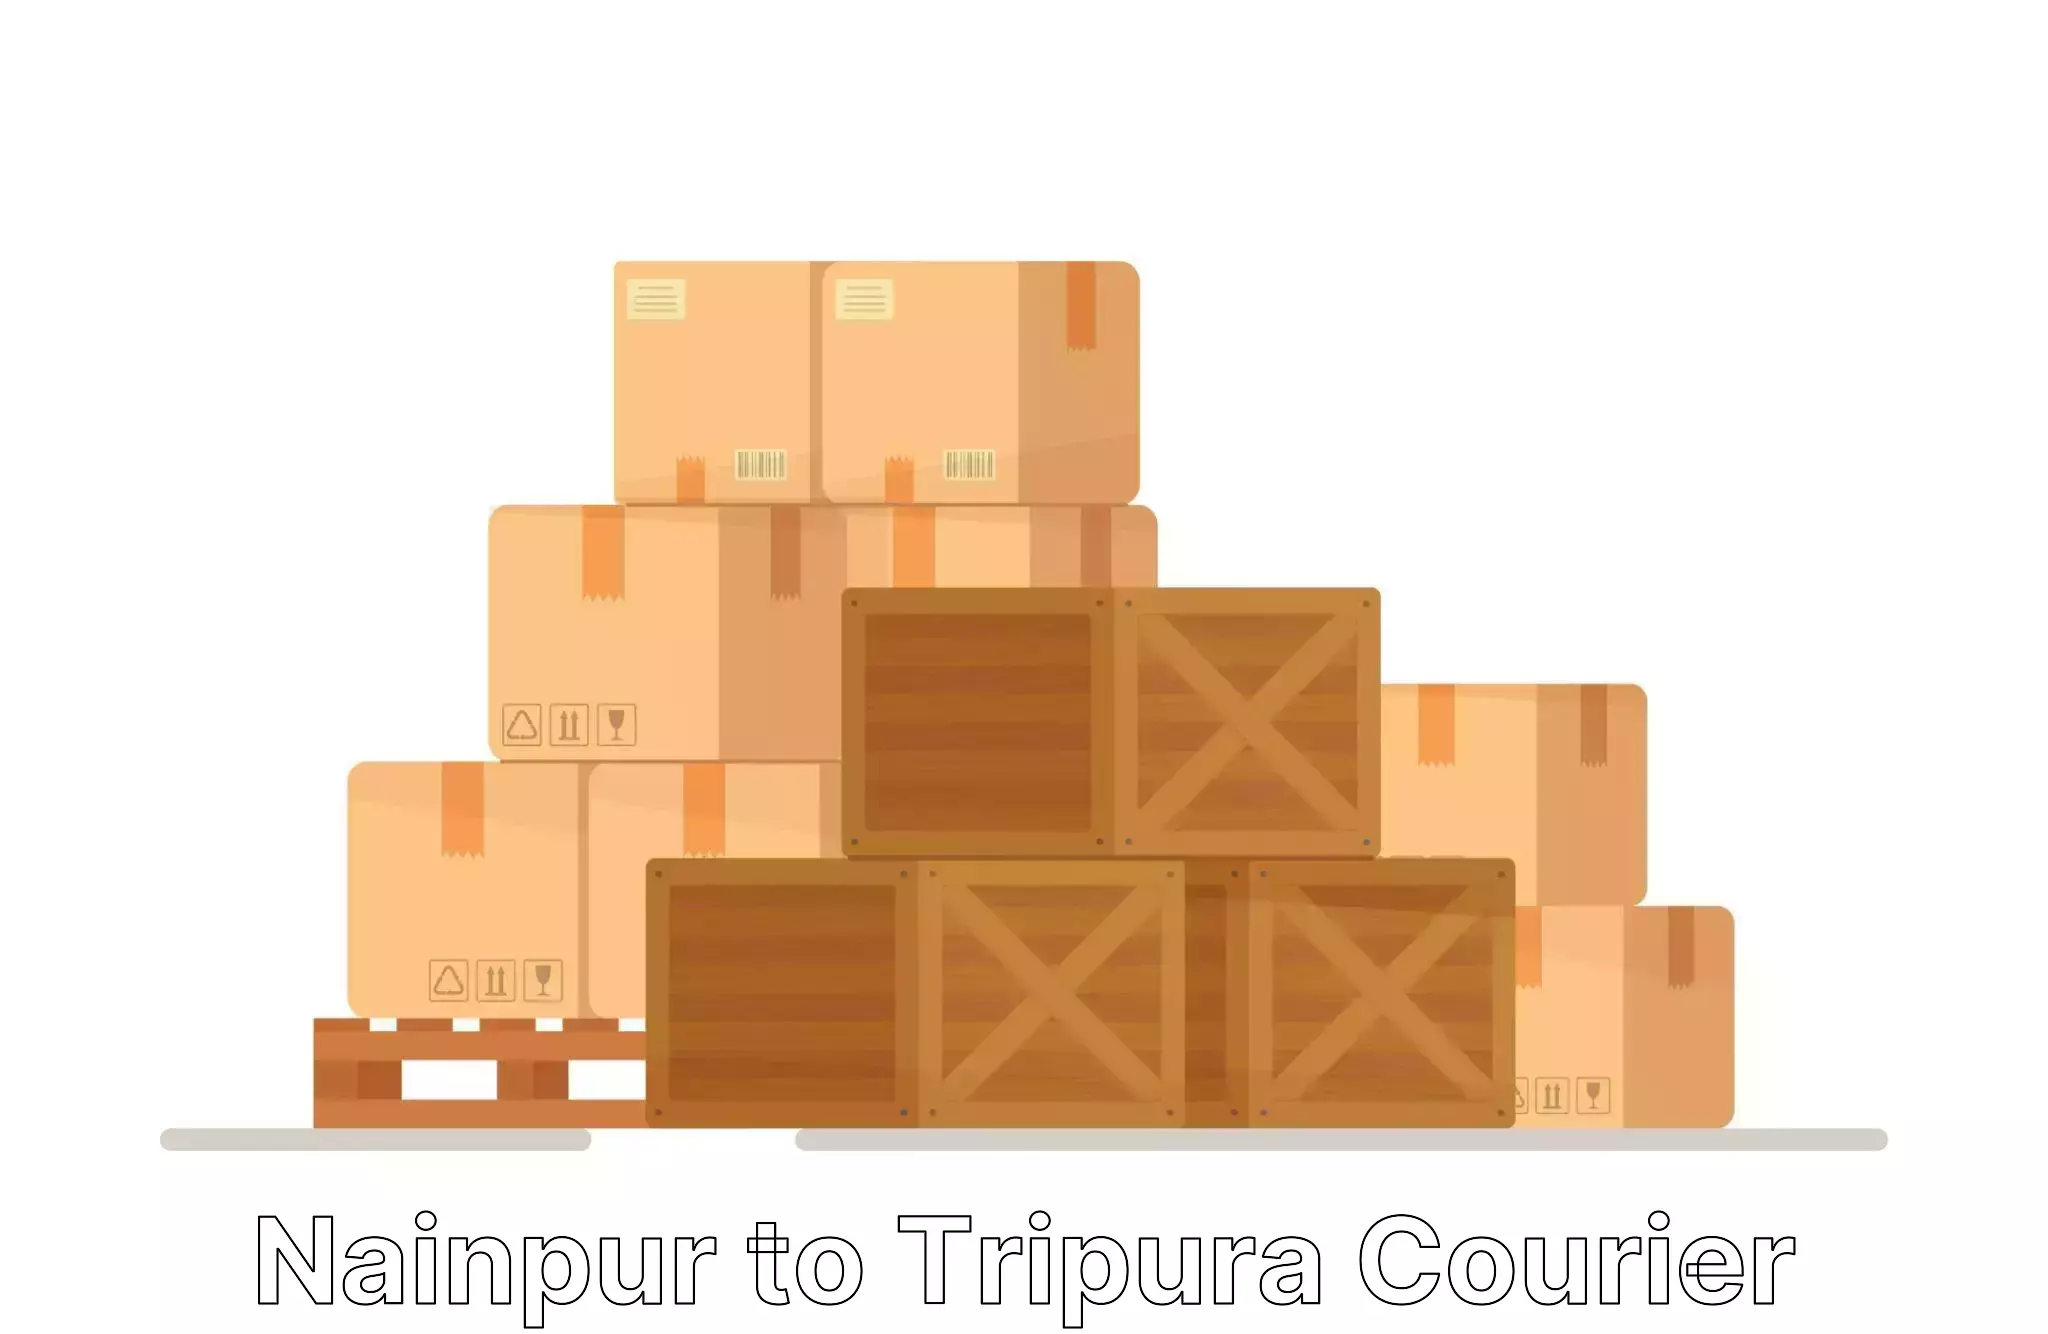 Budget-friendly movers Nainpur to Sonamura